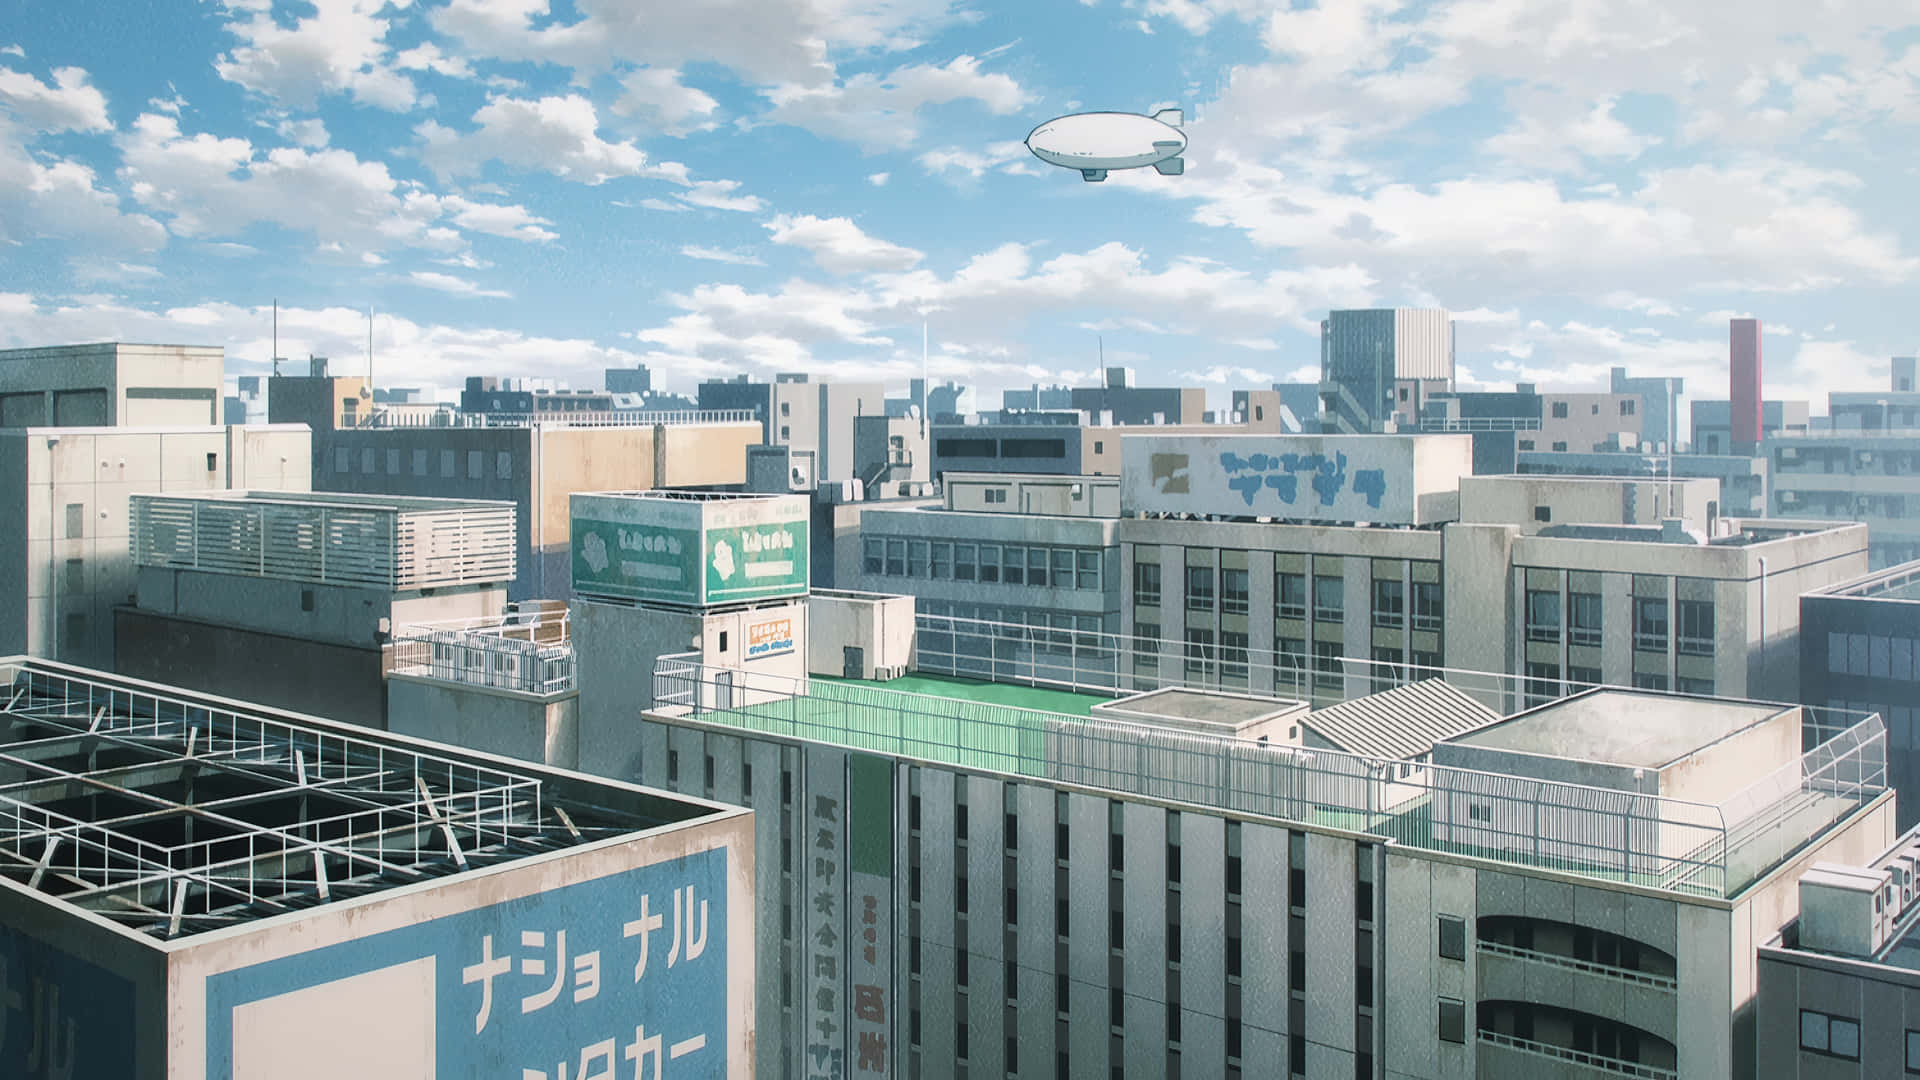 Explore the Street of Anime City!